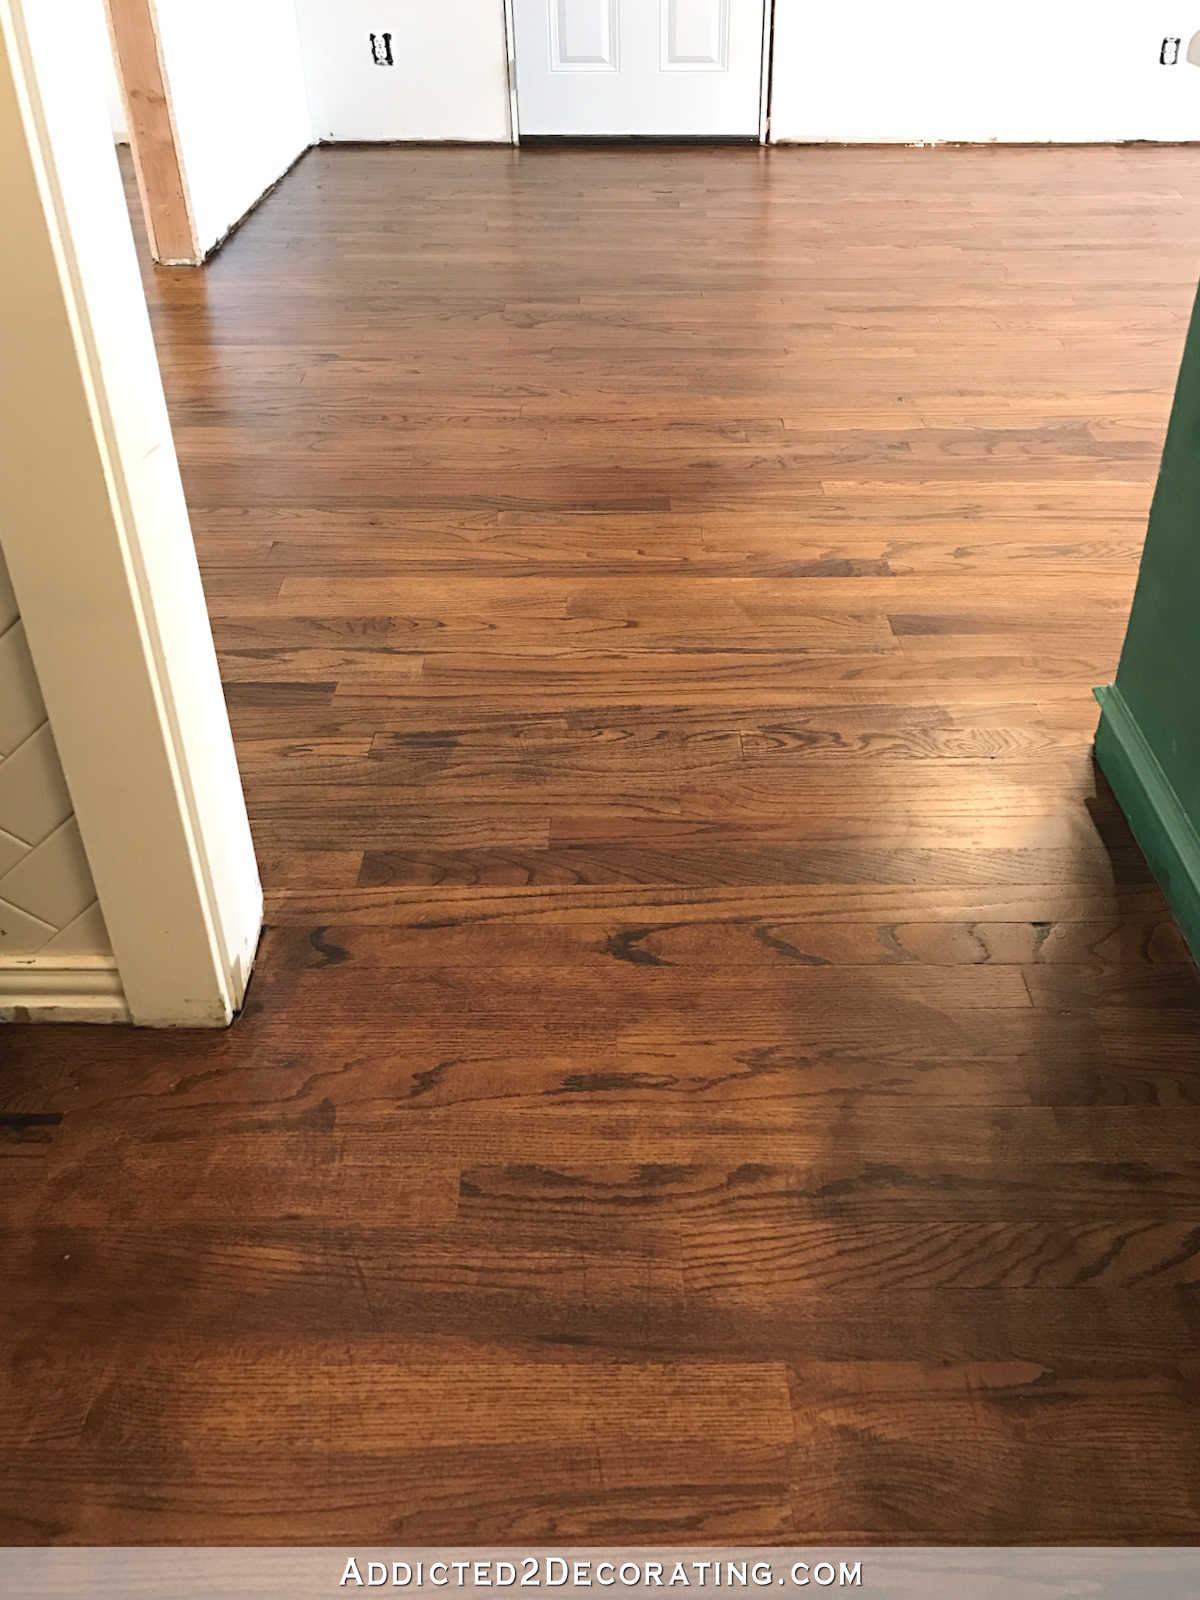 refinished red oak hardwood floors - kitchen and breakfast room